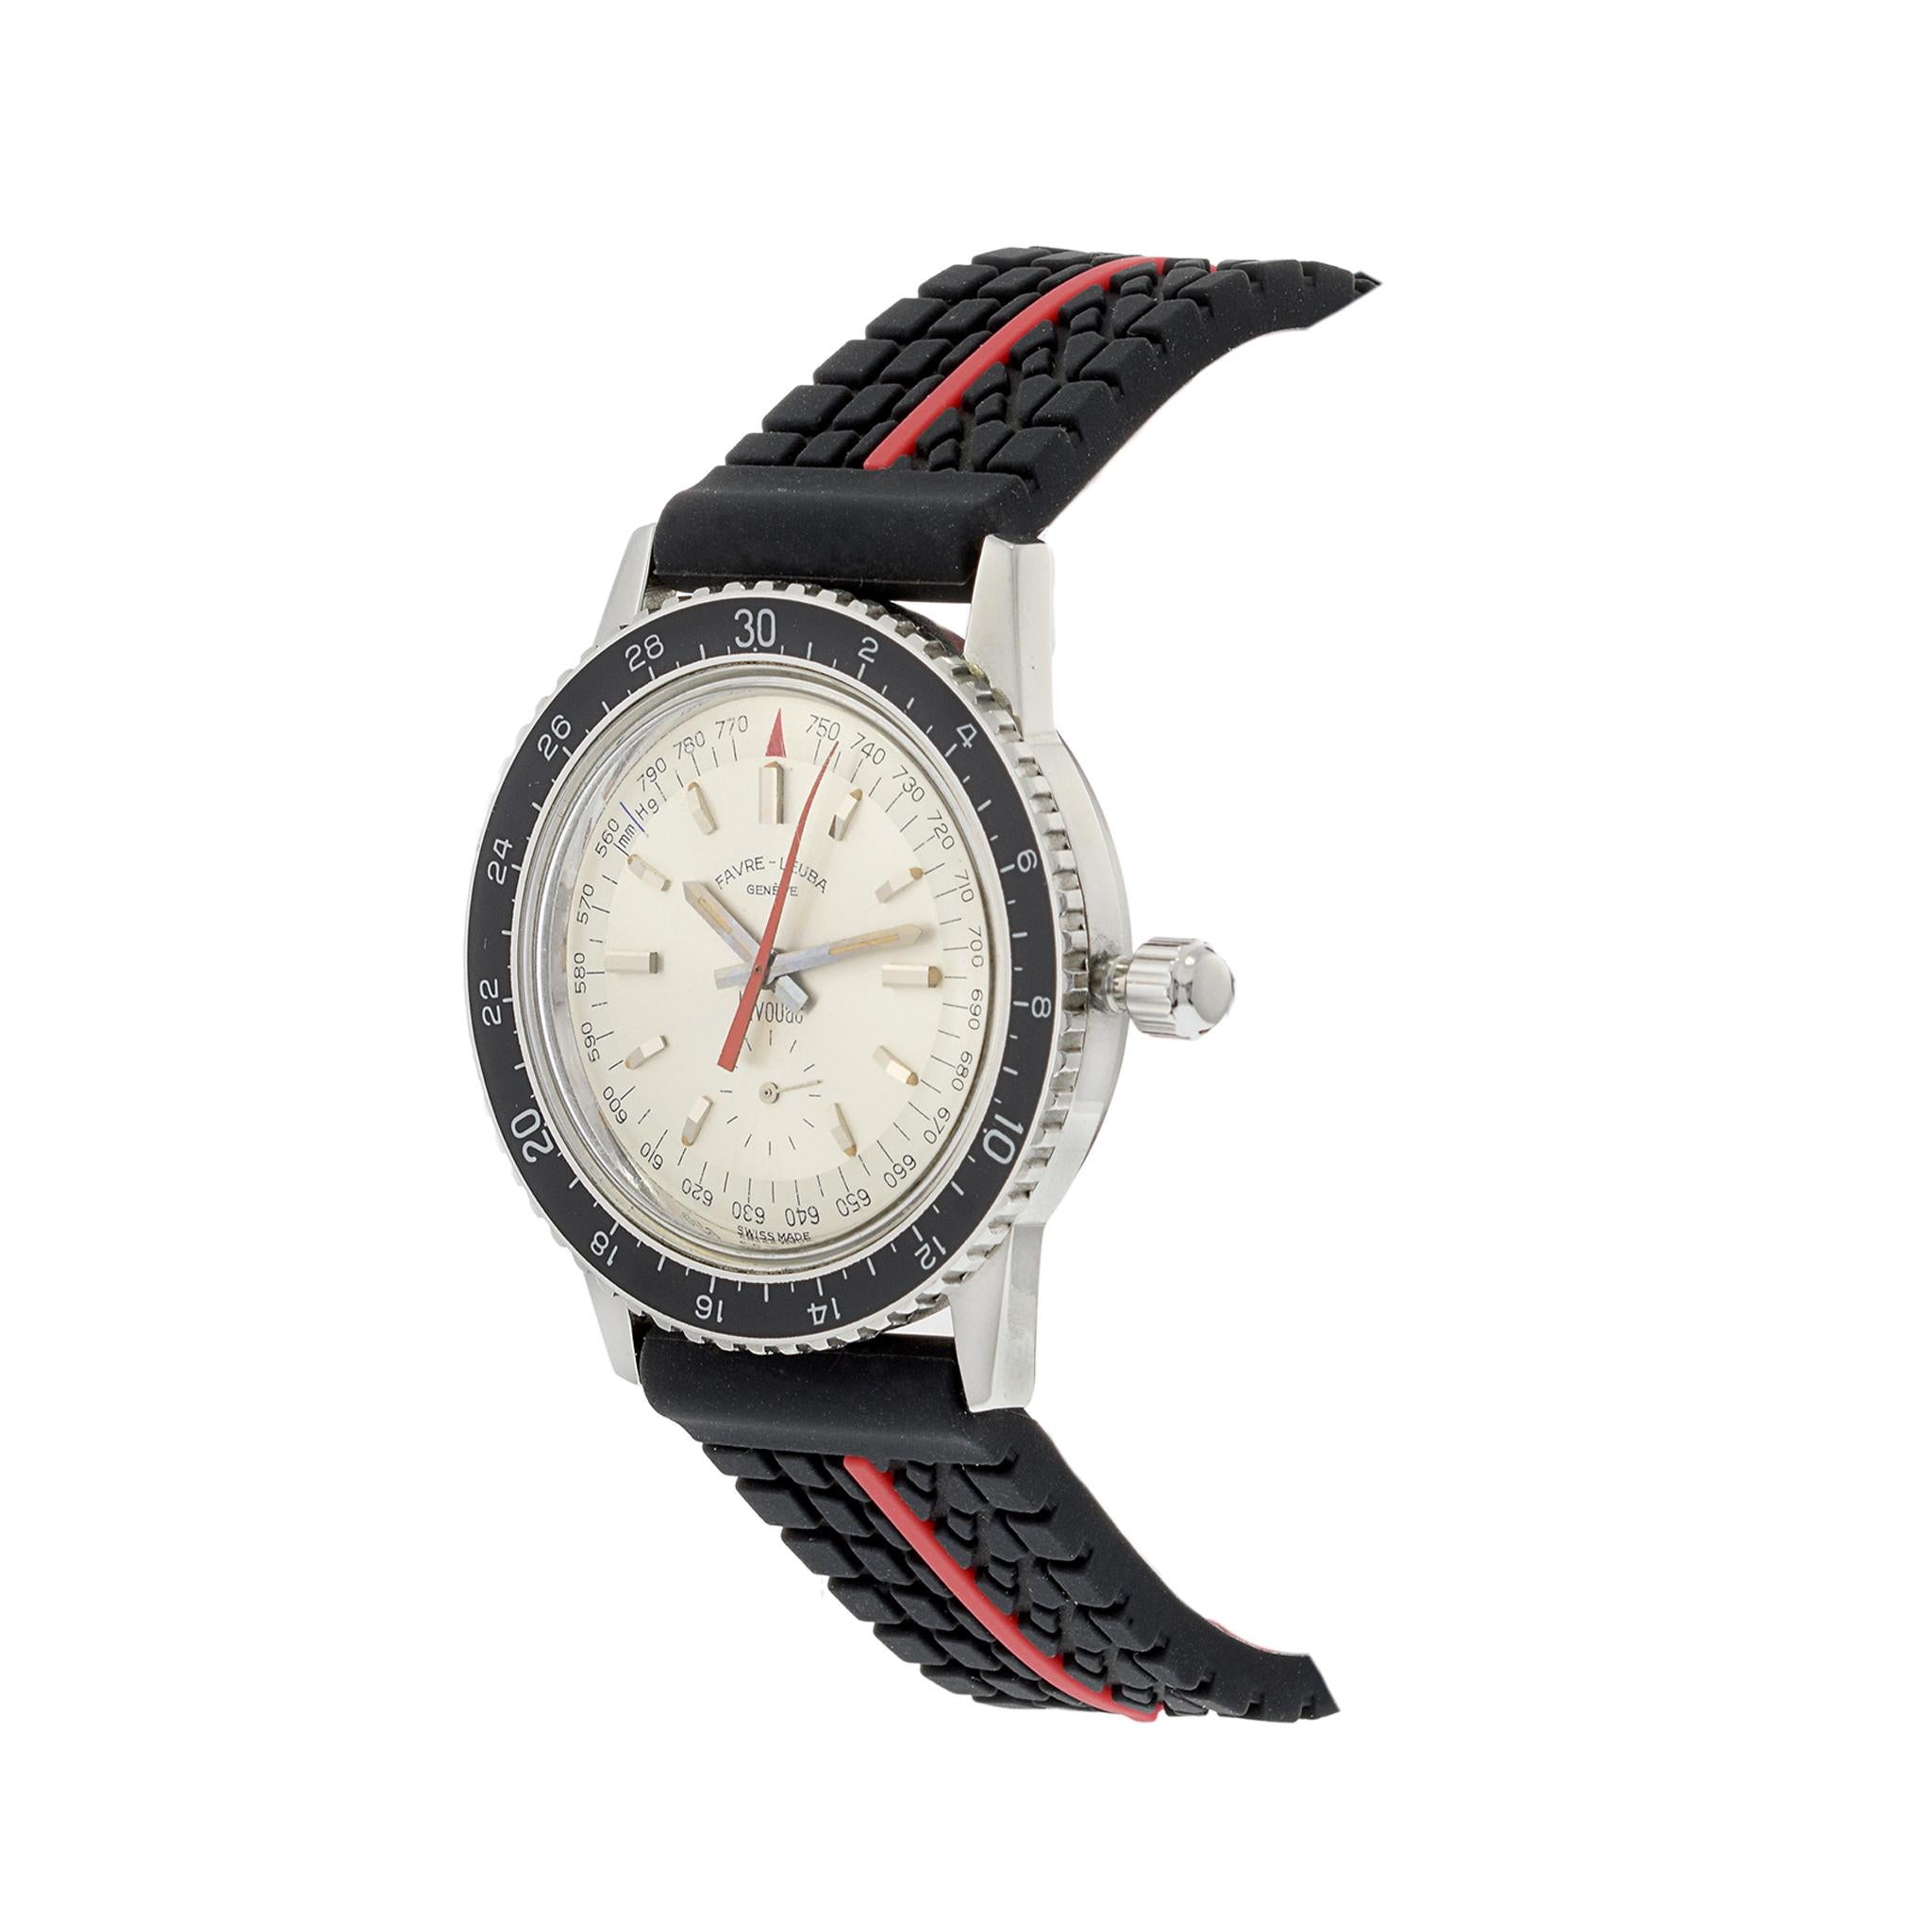 Retro Favre-Leuba Bivouac Reference 53213 Altimeter Barometer Watch For Sale